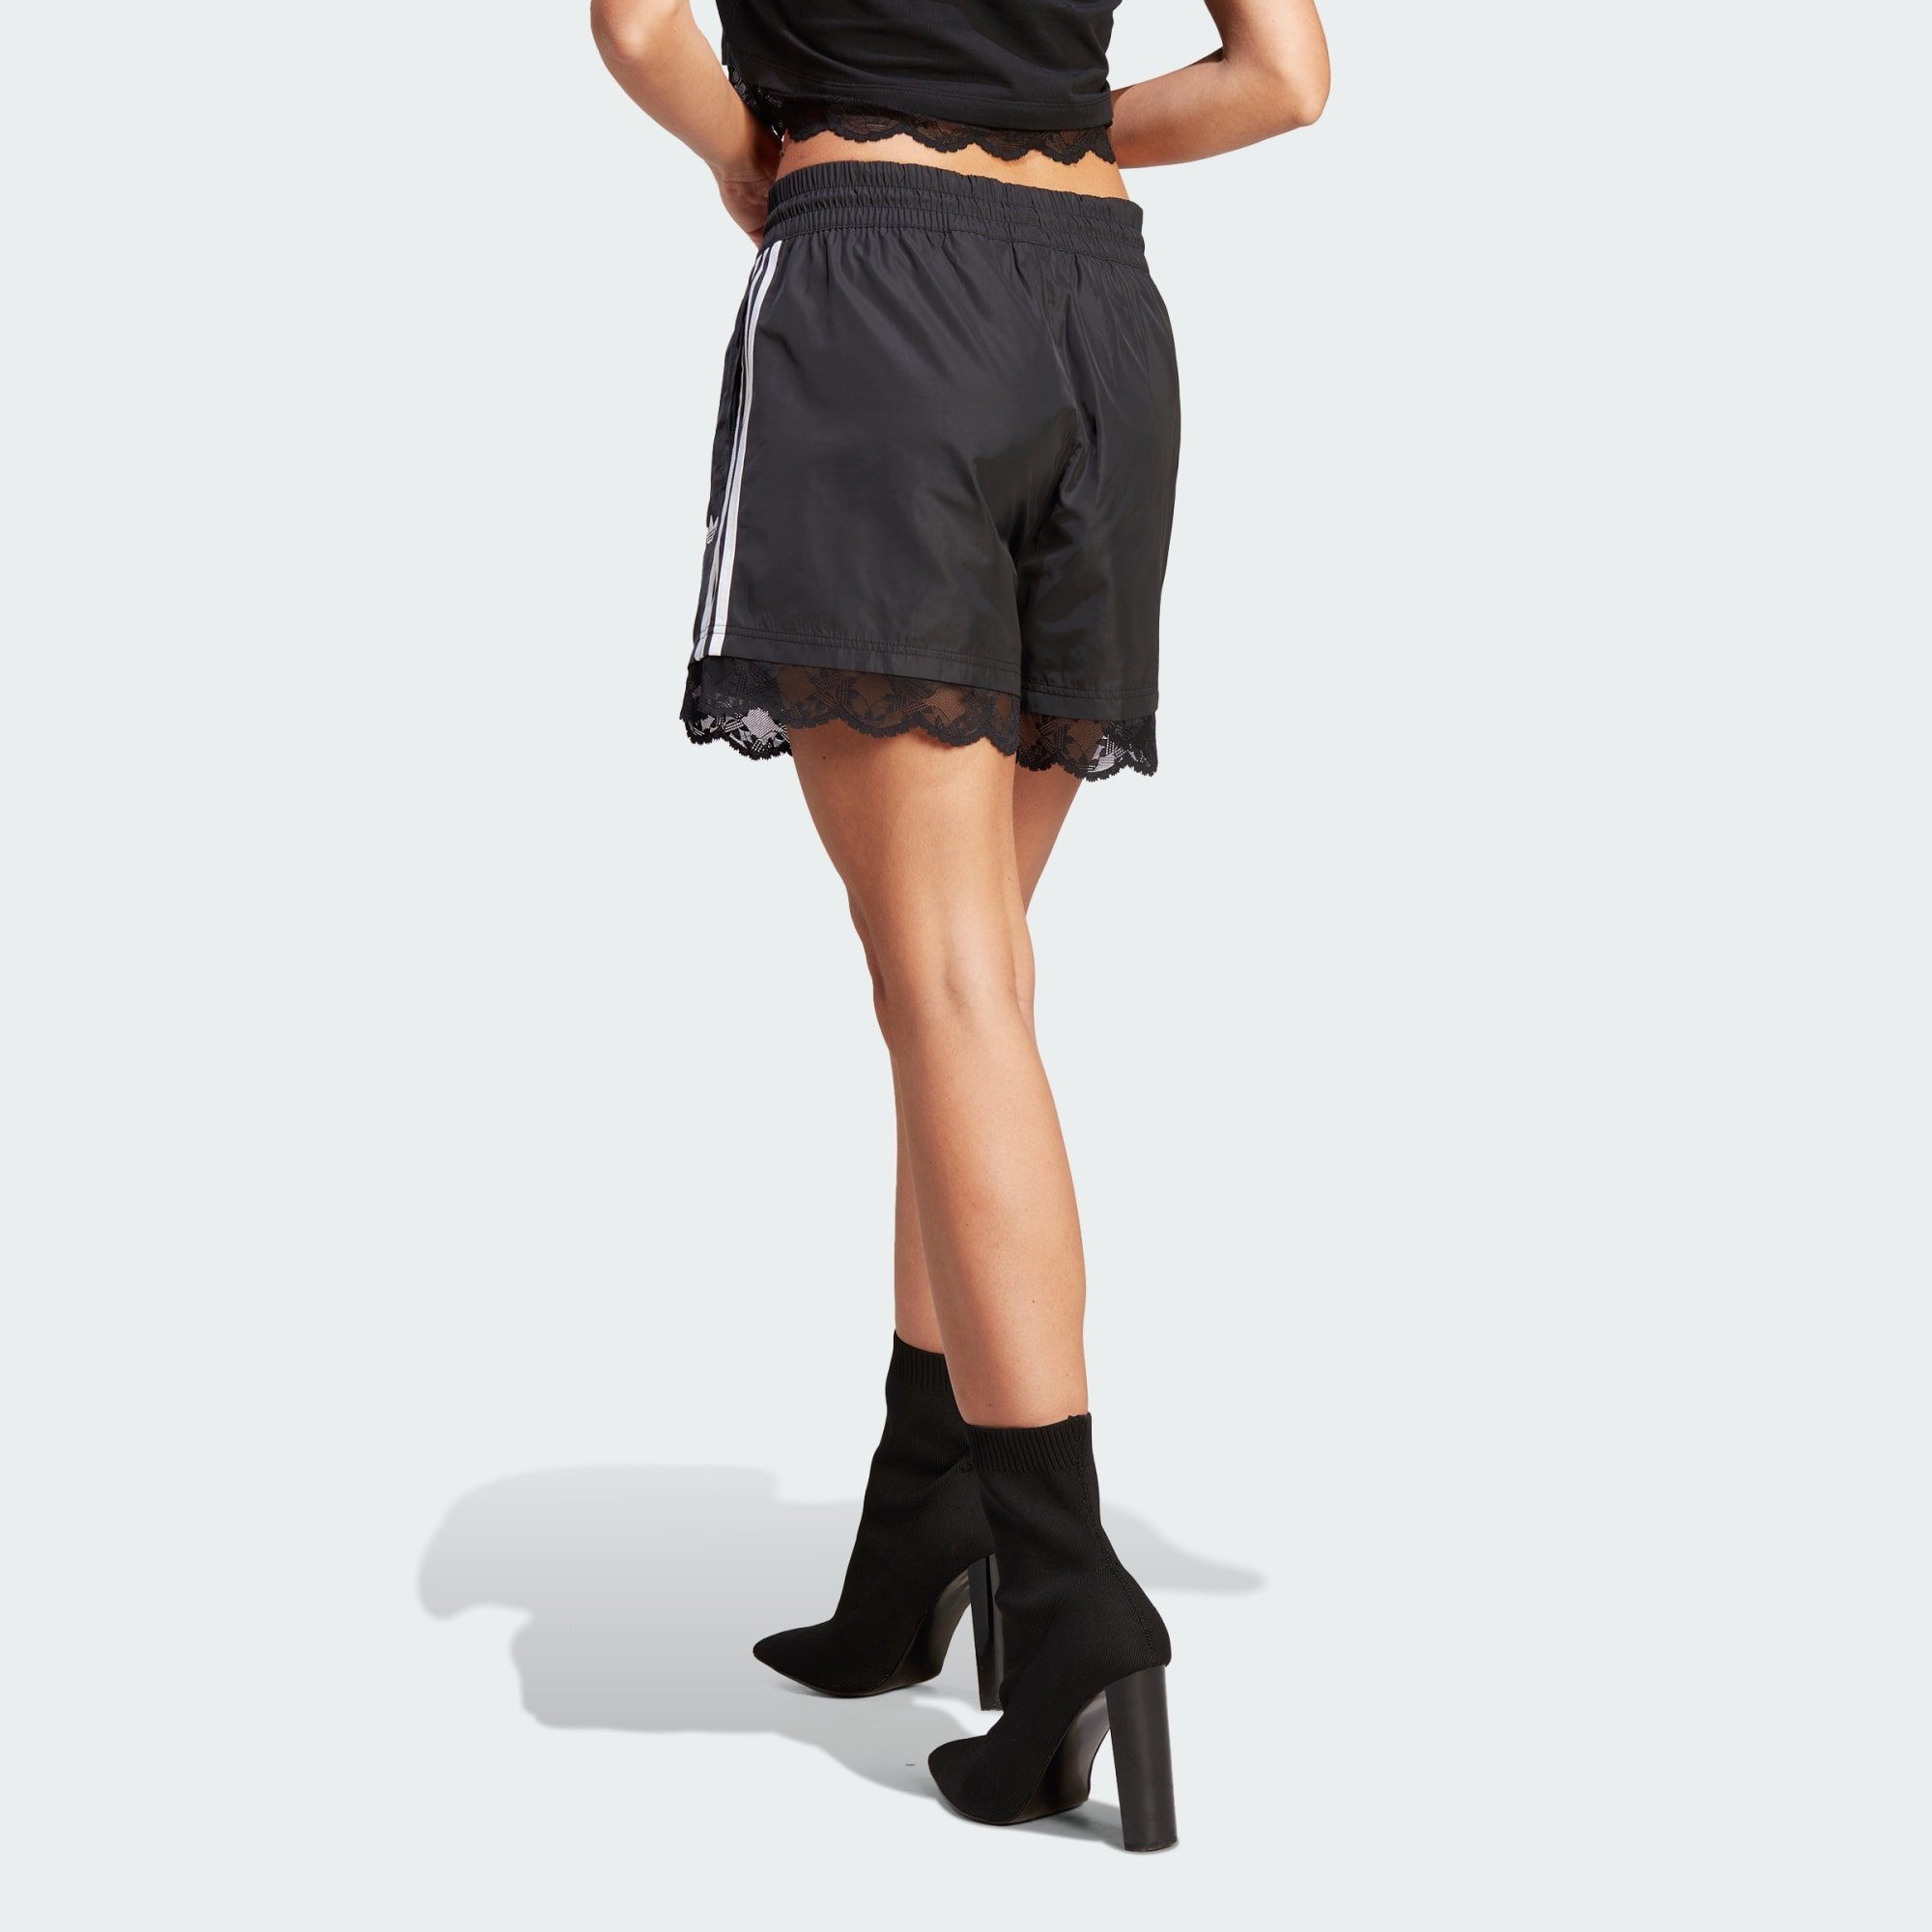 LACE TRIM Shorts SHORTS Originals 3-STREIFEN adidas